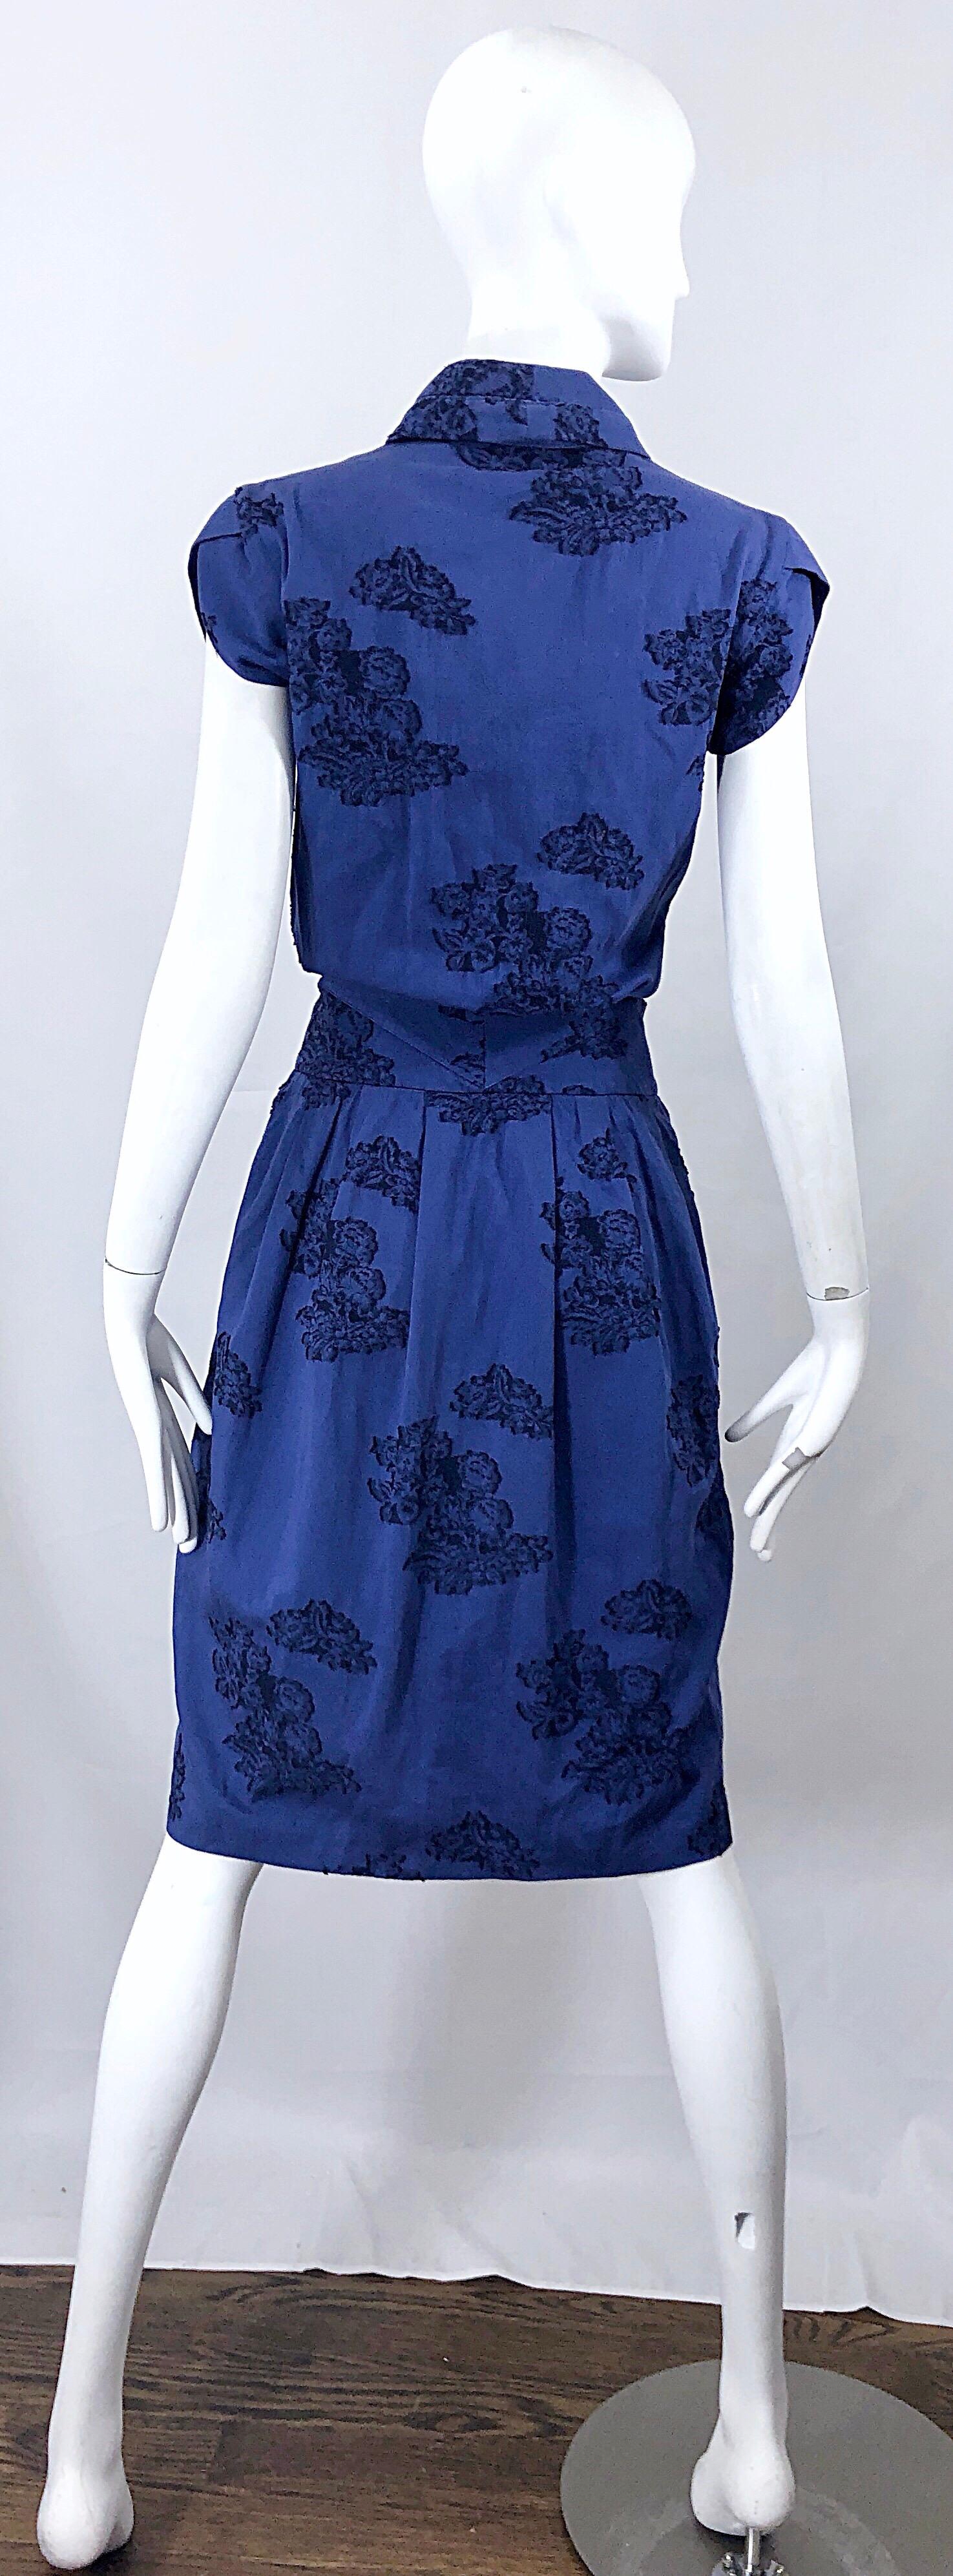 Alexander McQueen Blue + Black Lace Print Size 40 1950s Style Bustle Dress 9